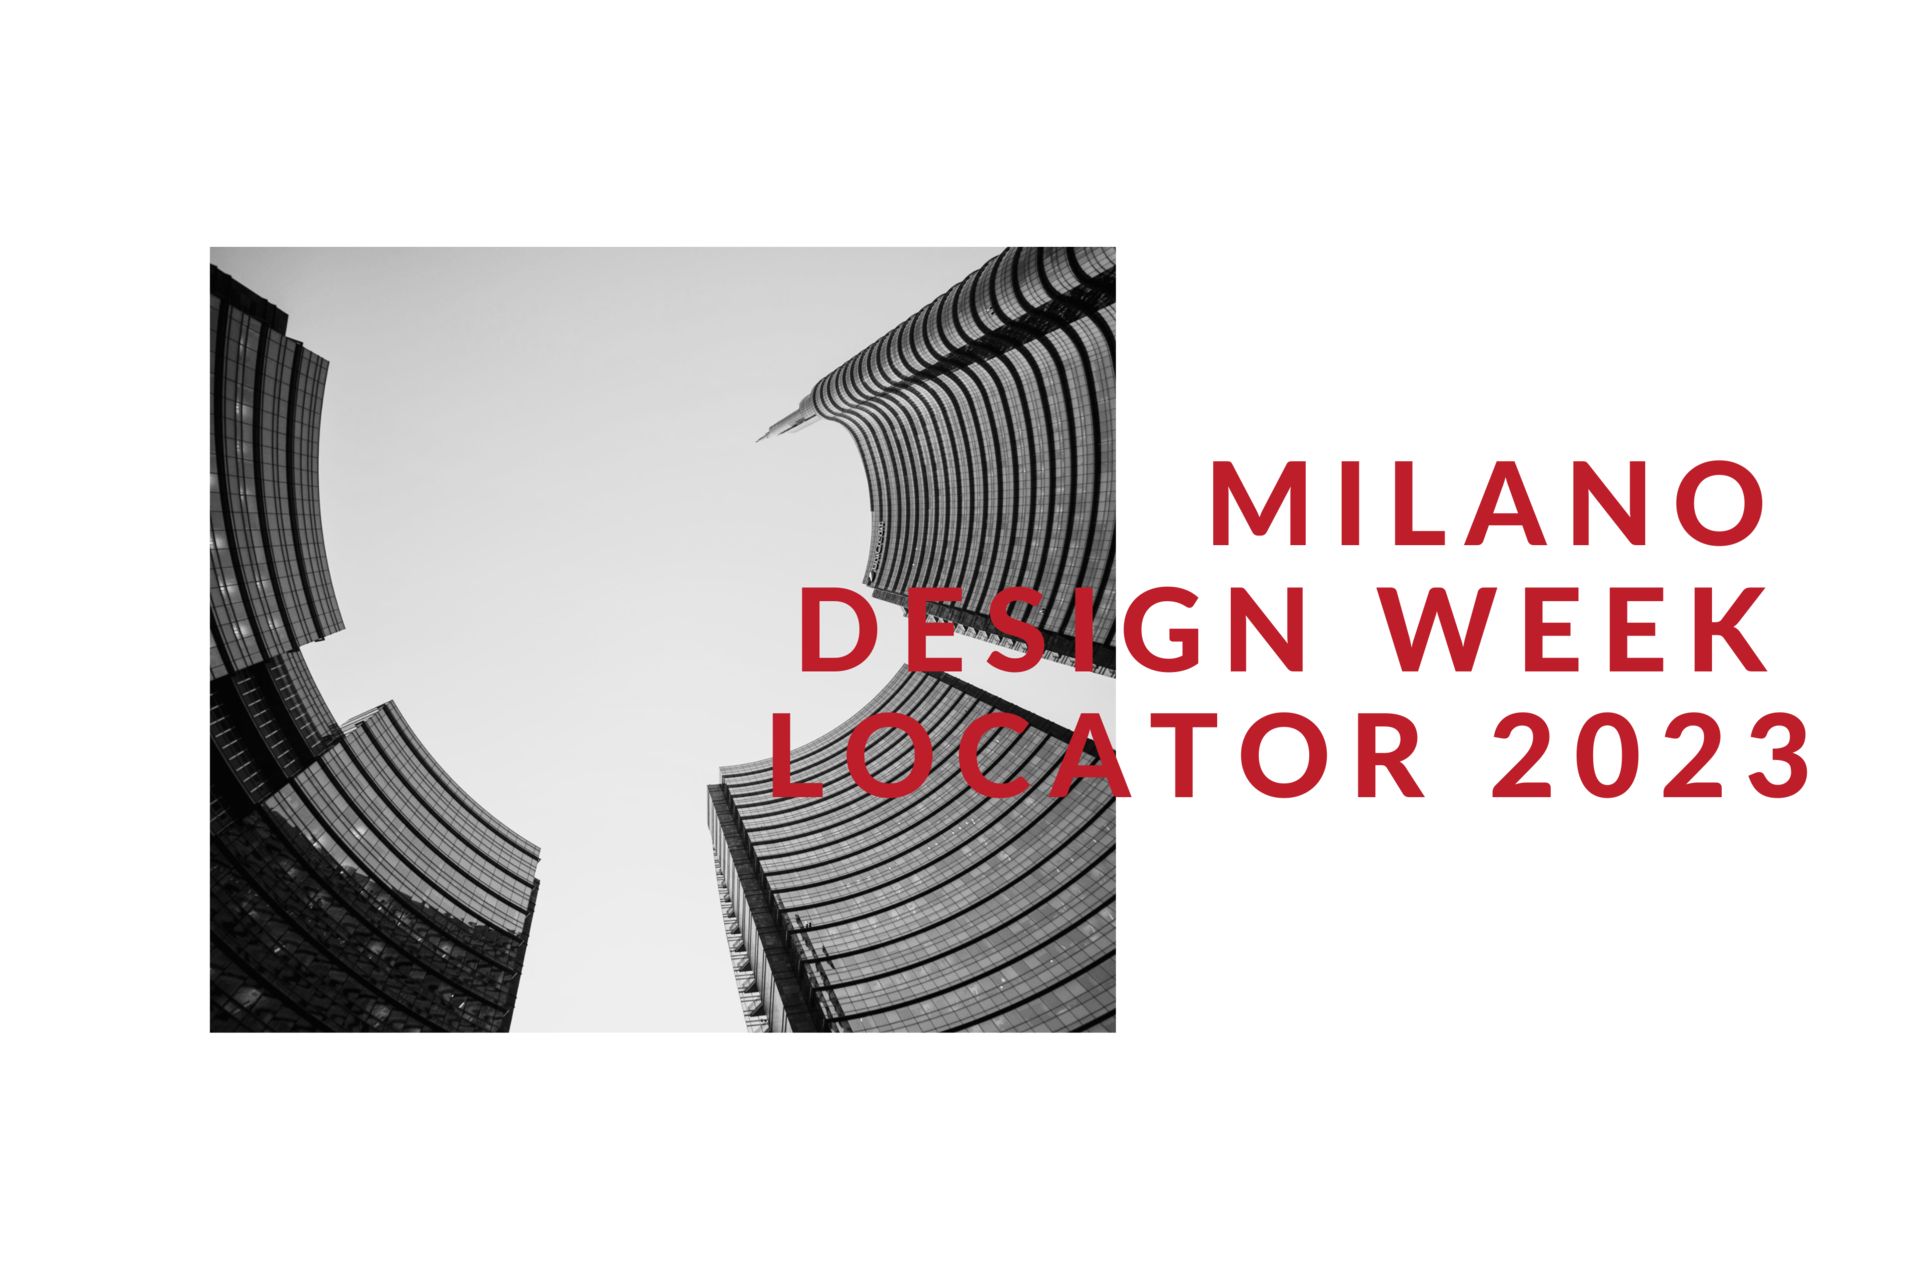 Milano Design Week Locator 2023